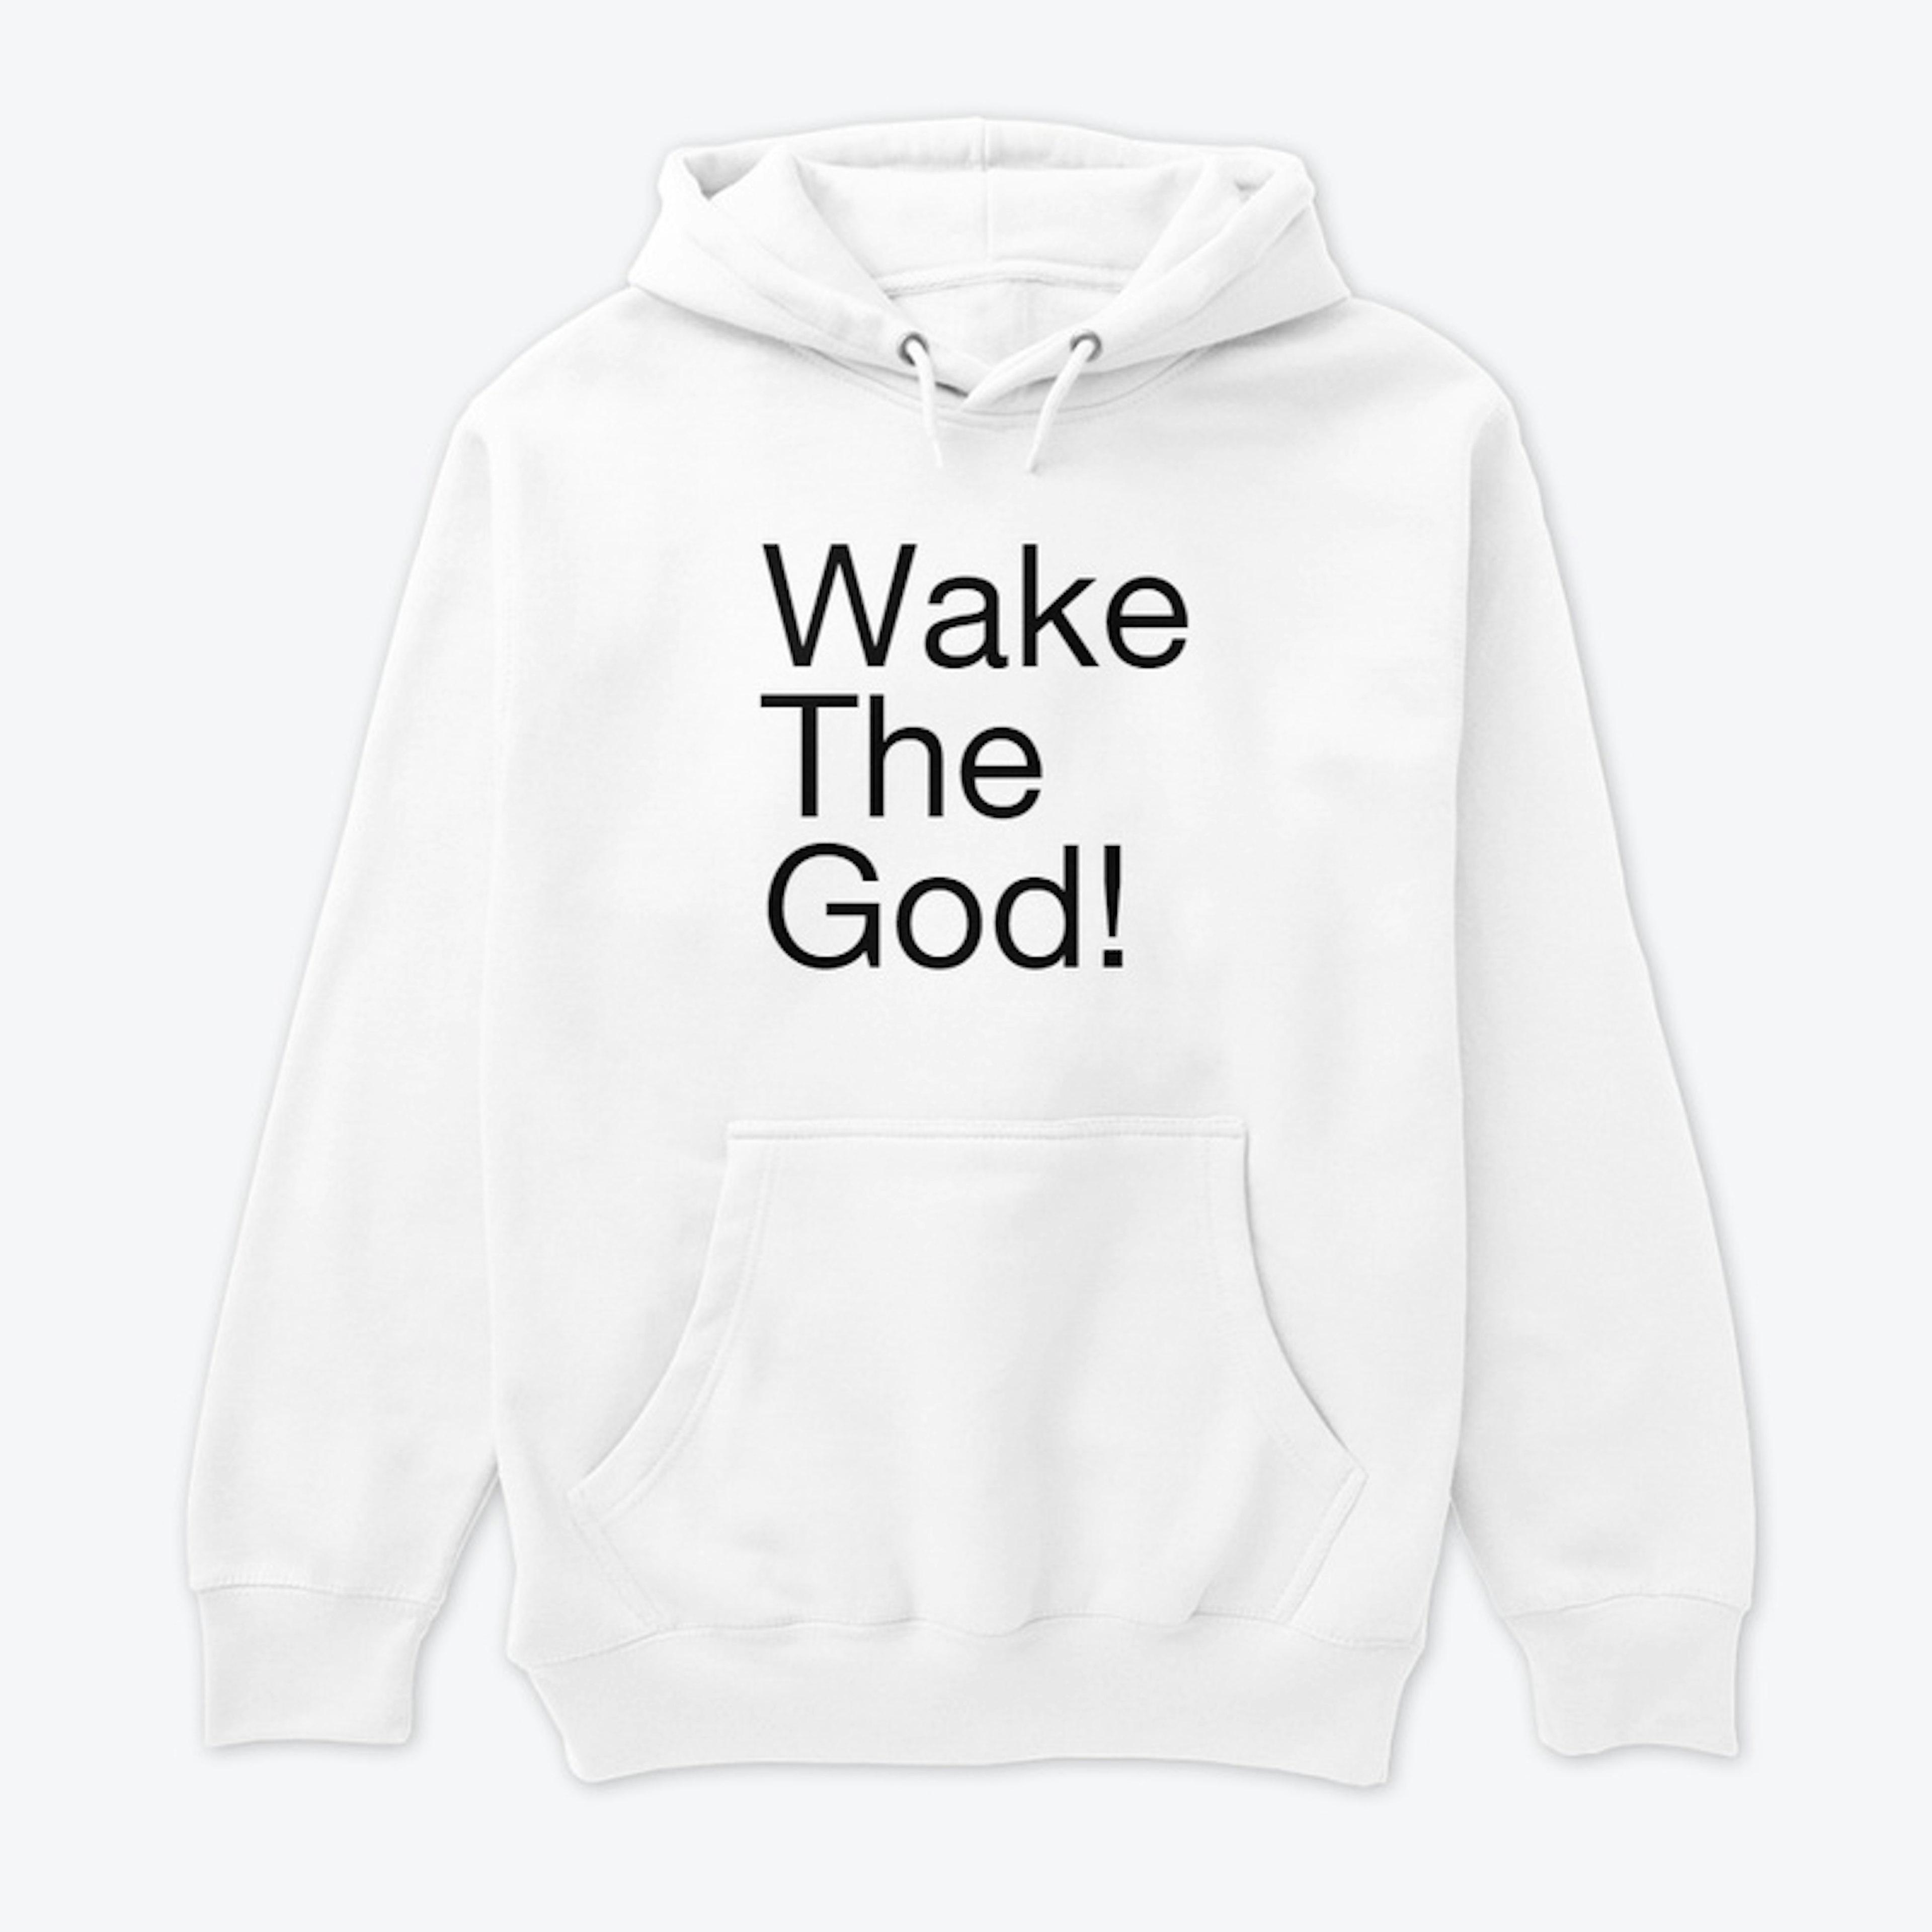 Wake The God!